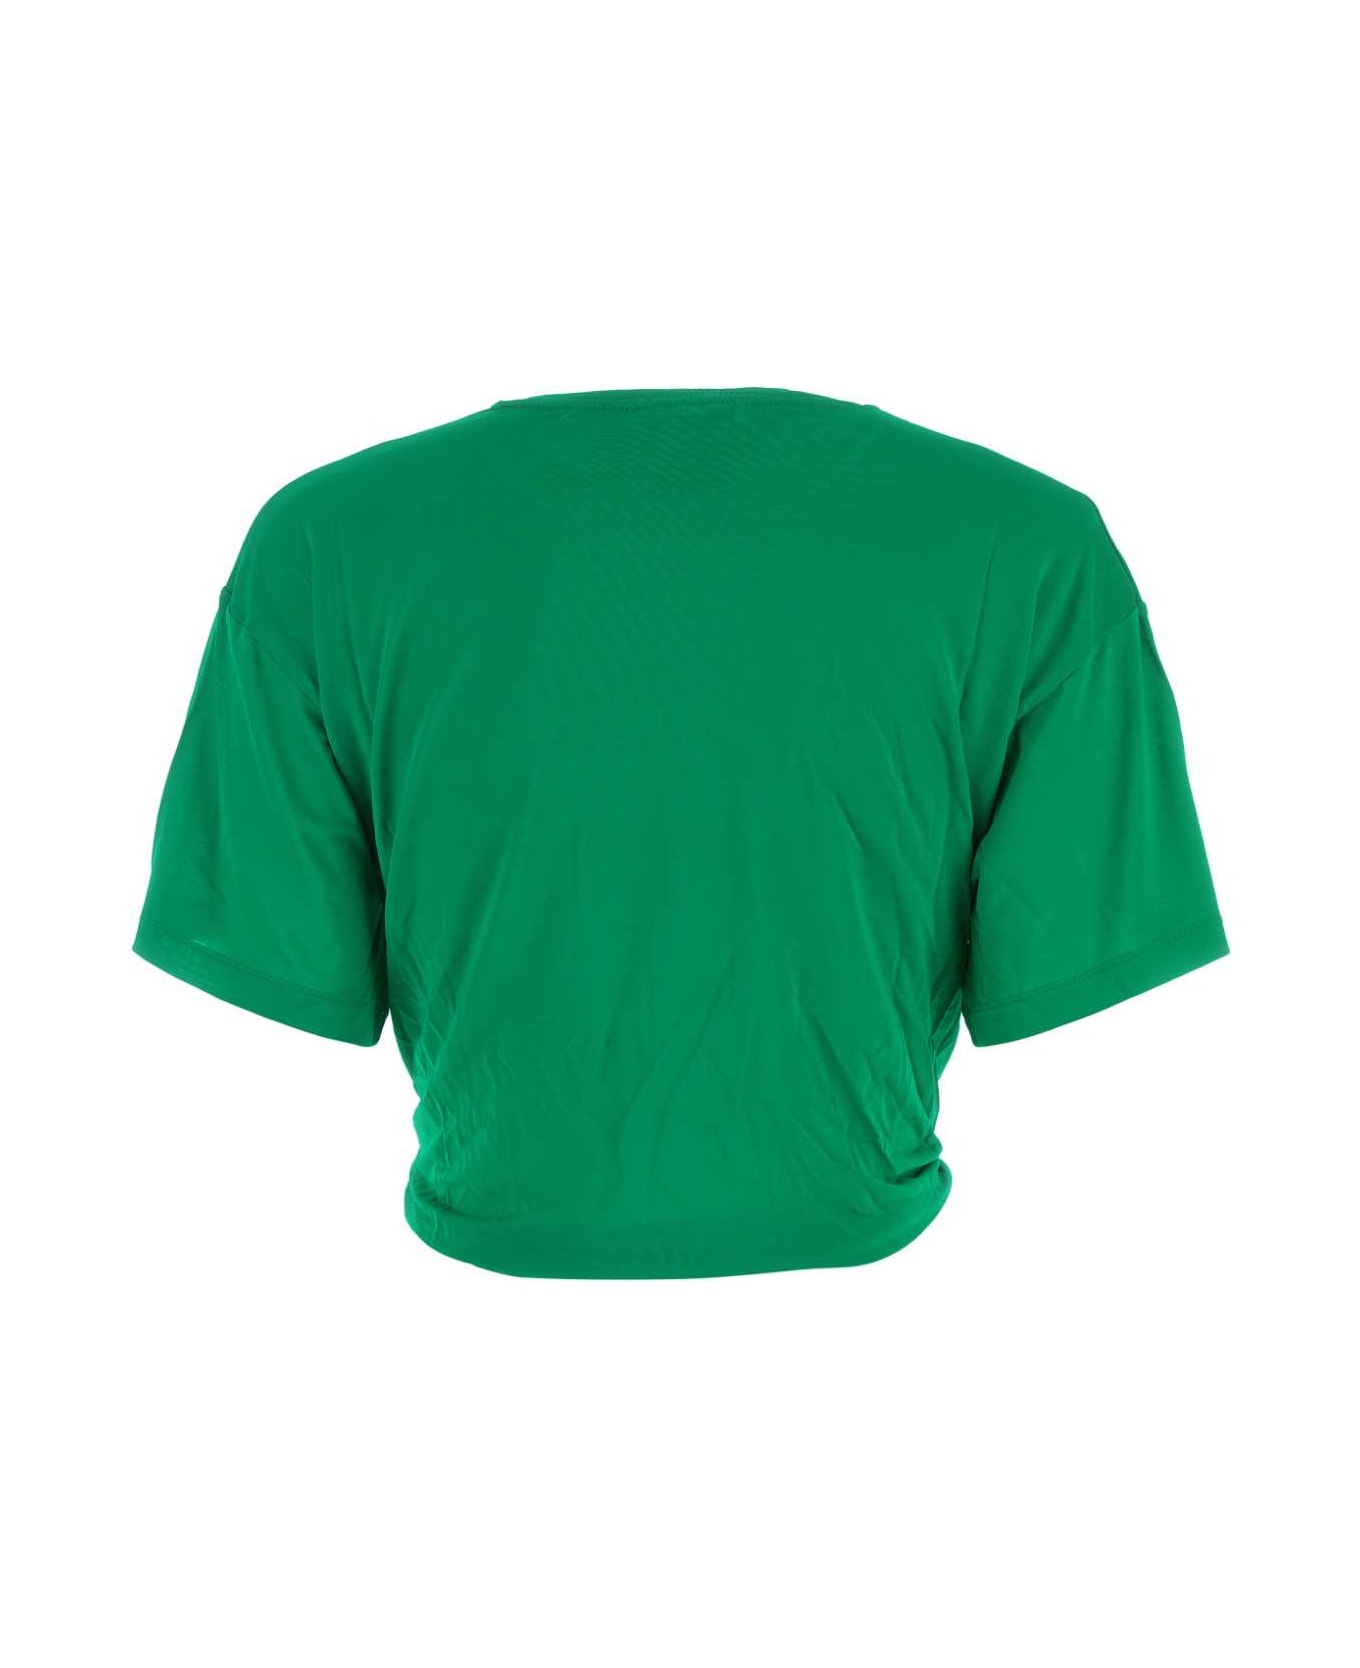 Paco Rabanne Green Stretch Viscose Top - EMERAUDE Tシャツ